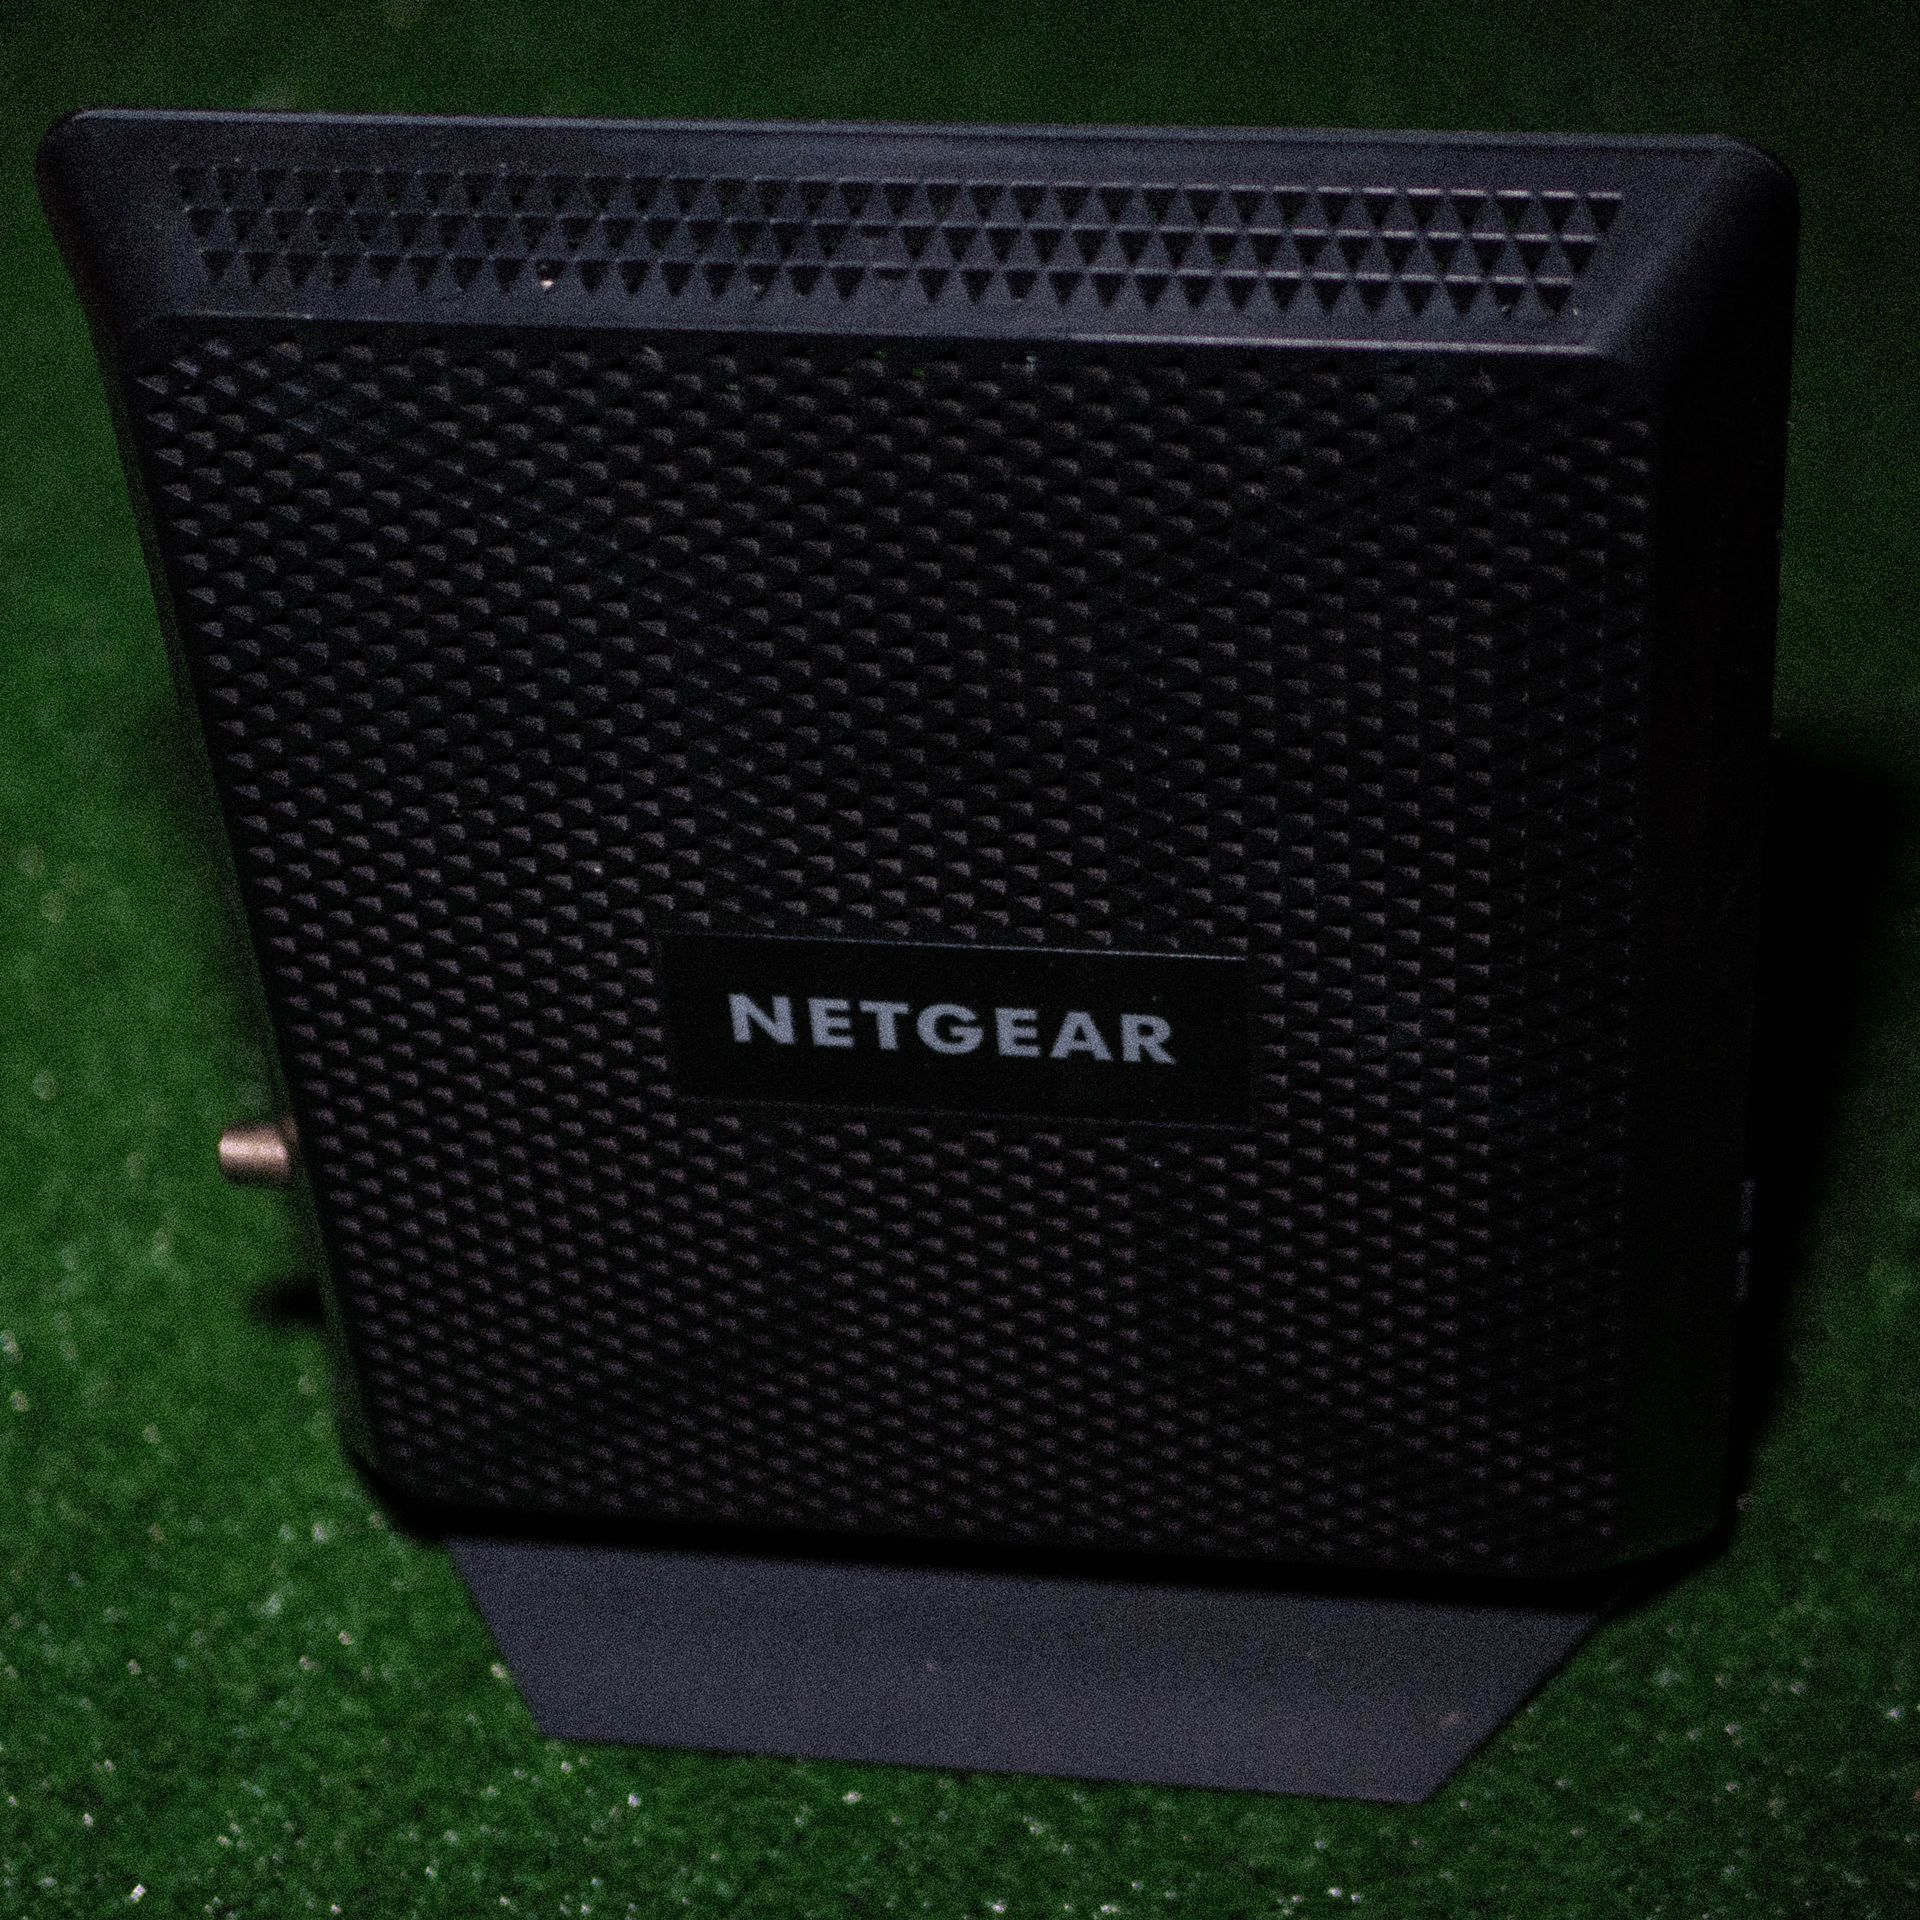 NETGEAR NightHawk AC 1900 WiFi Router